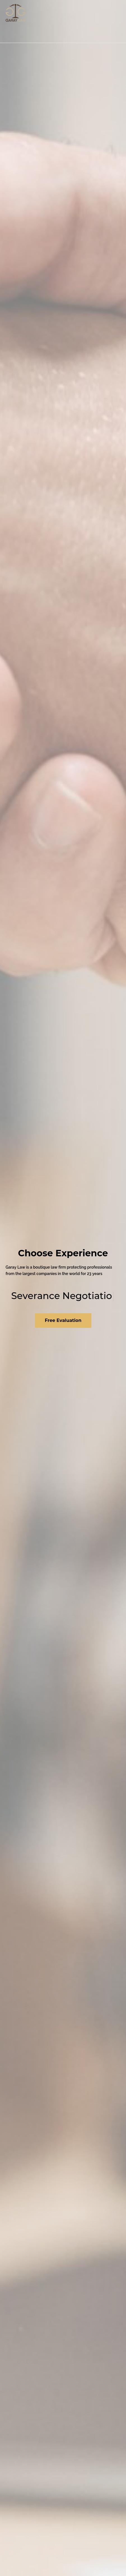 Garay Law - Long Beach CA Lawyers